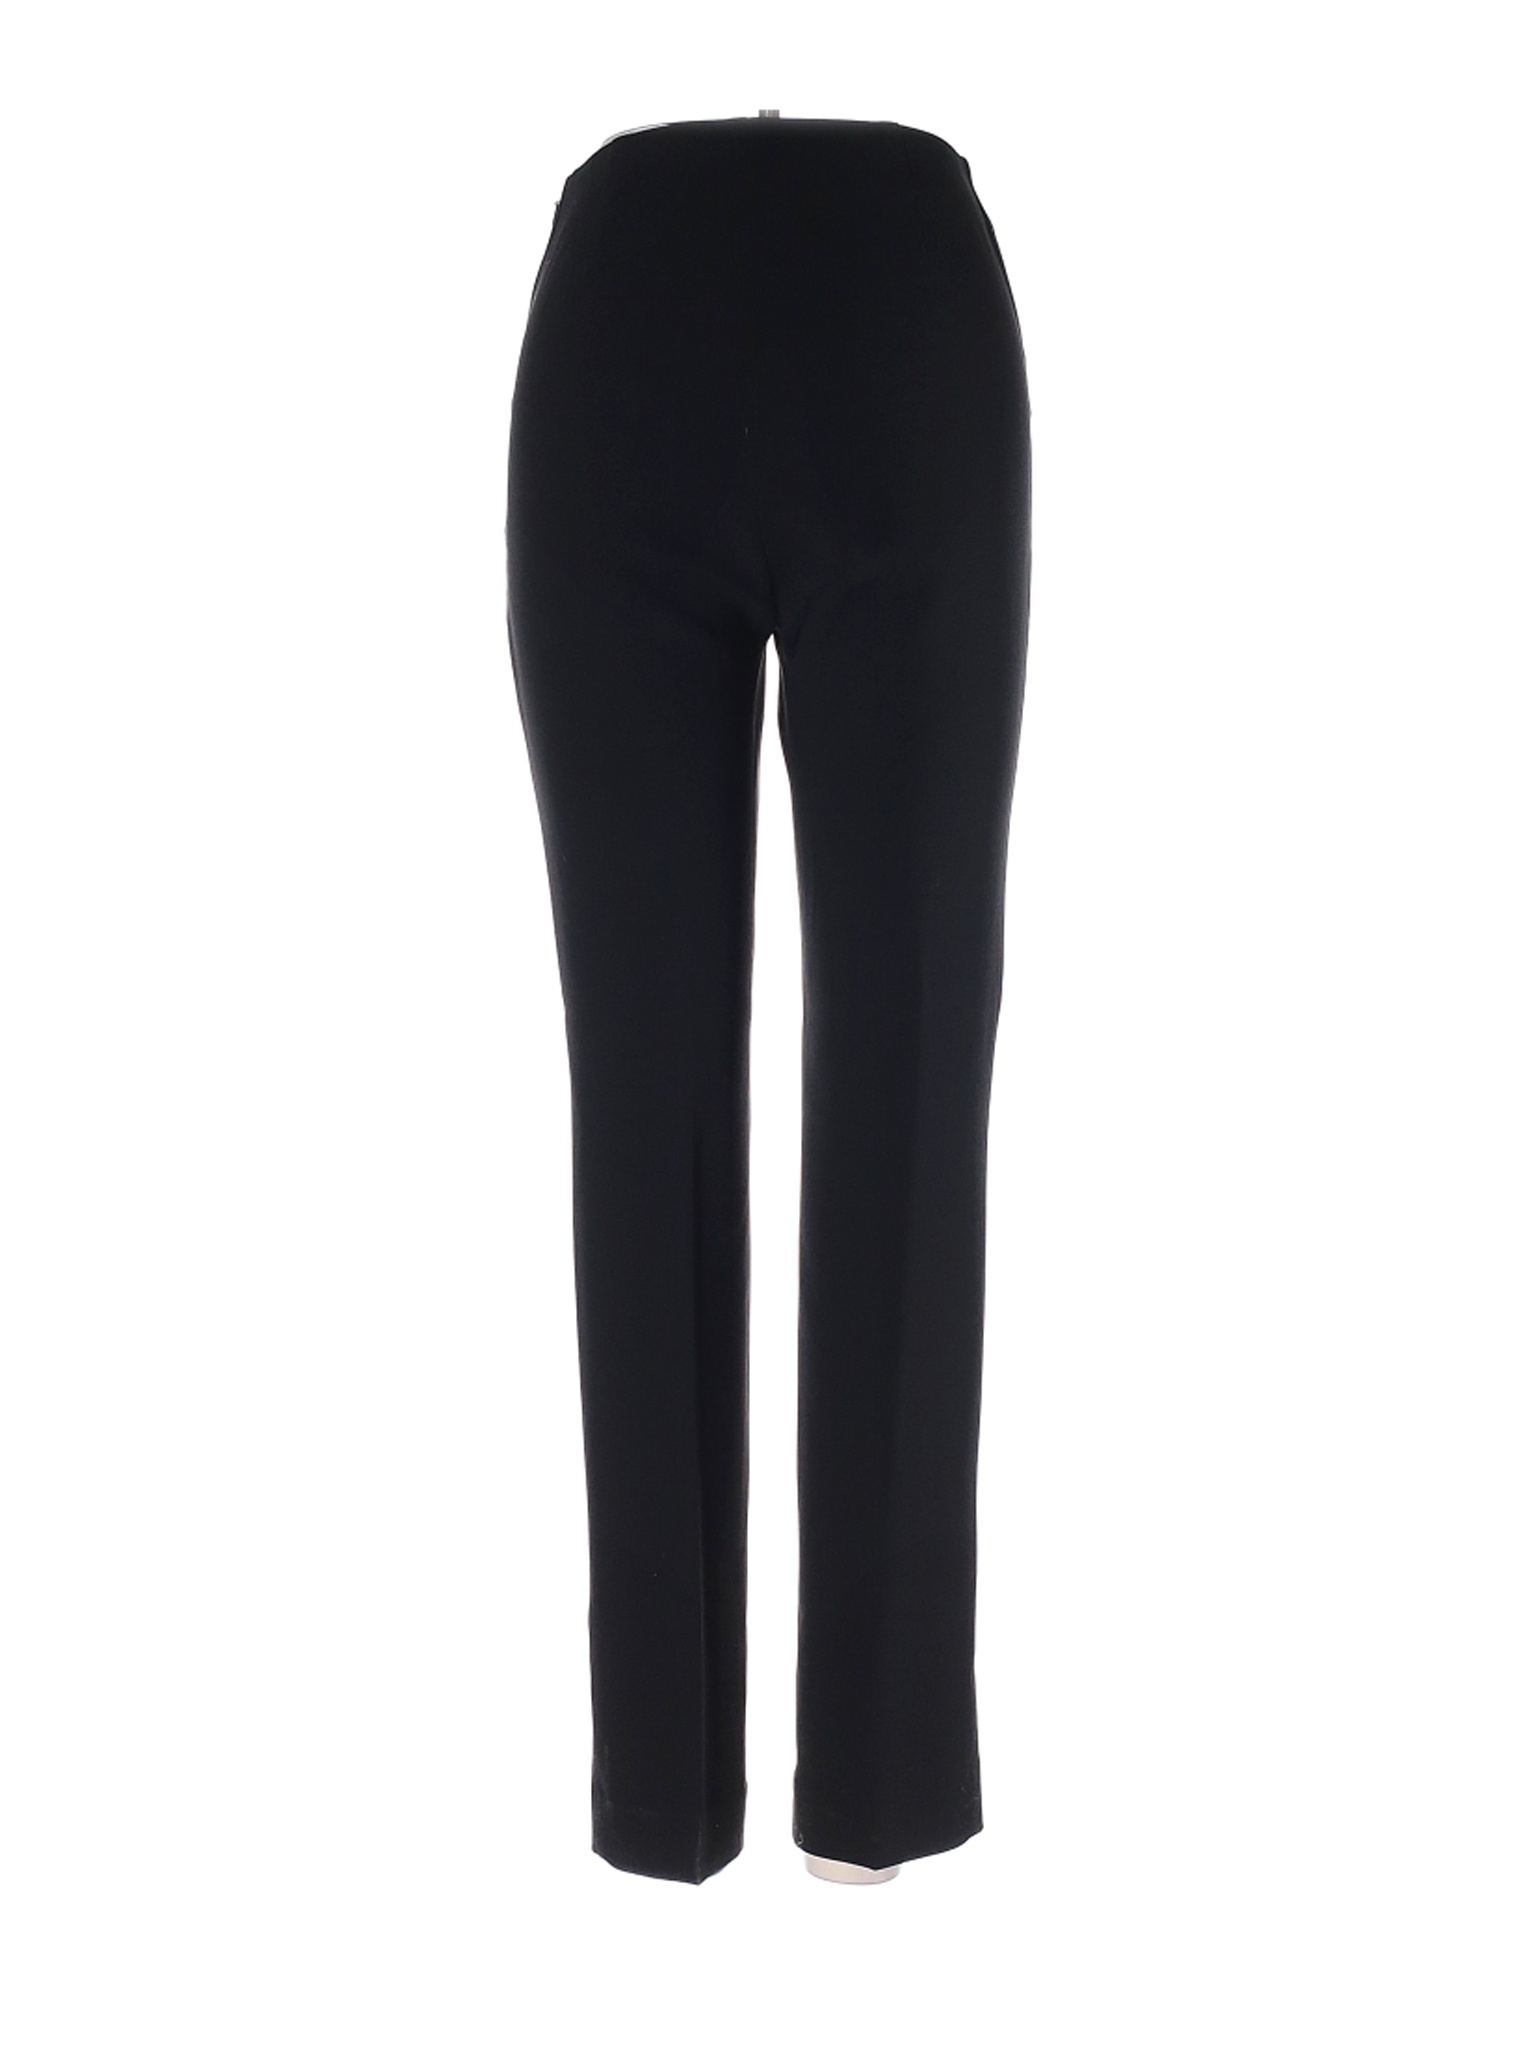 Babaton Women Black Casual Pants 4 | eBay